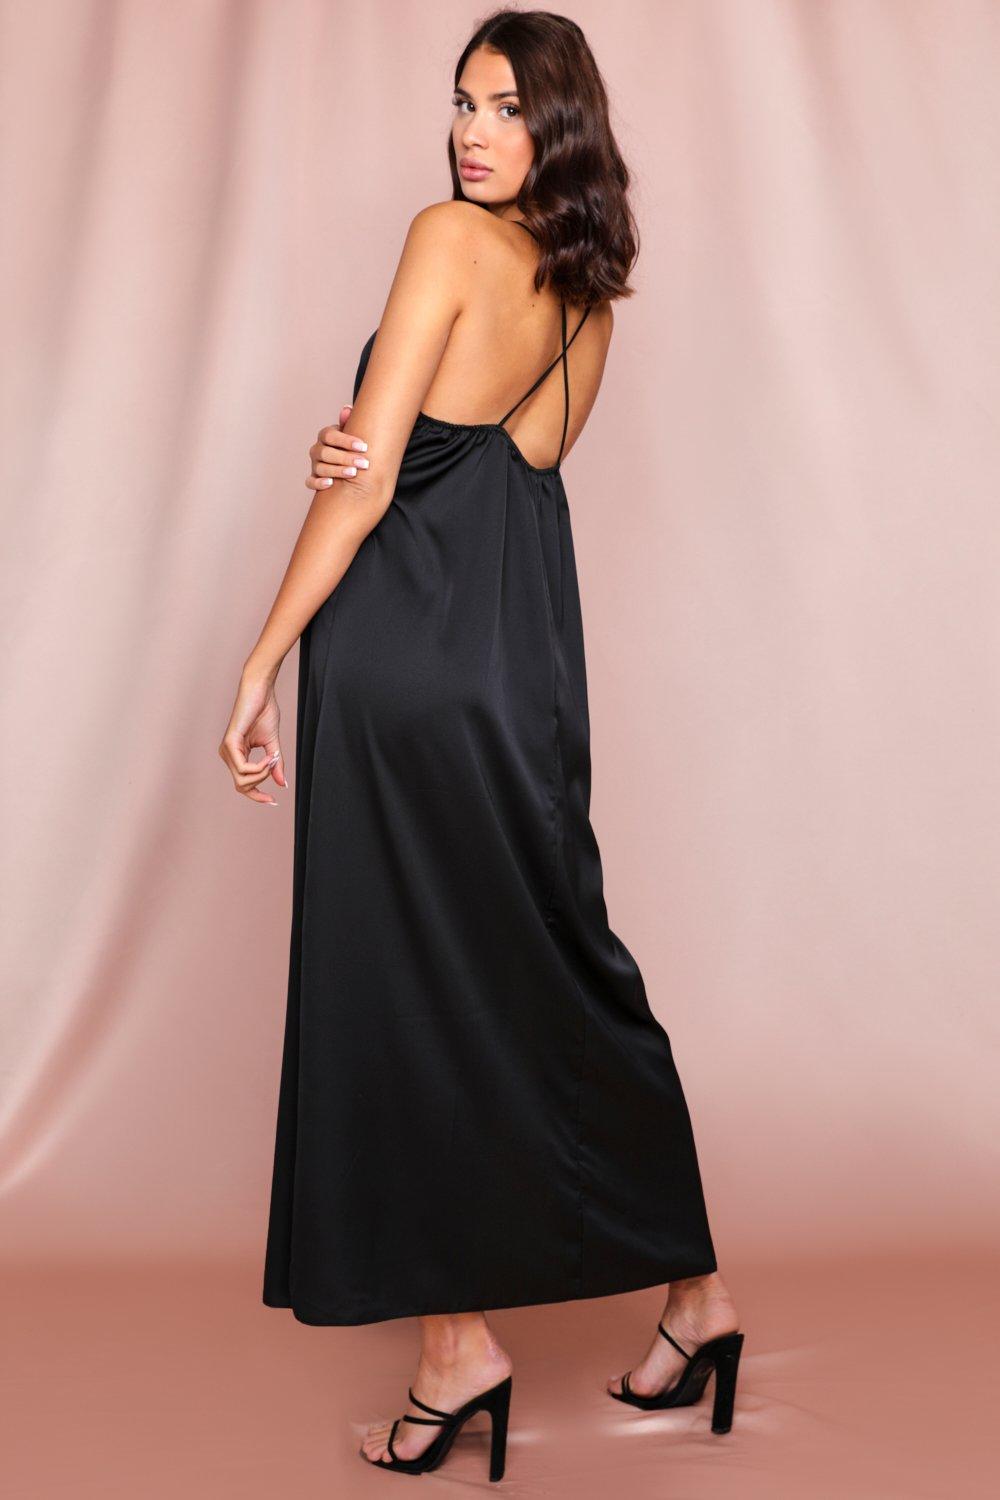 black satin strappy dress